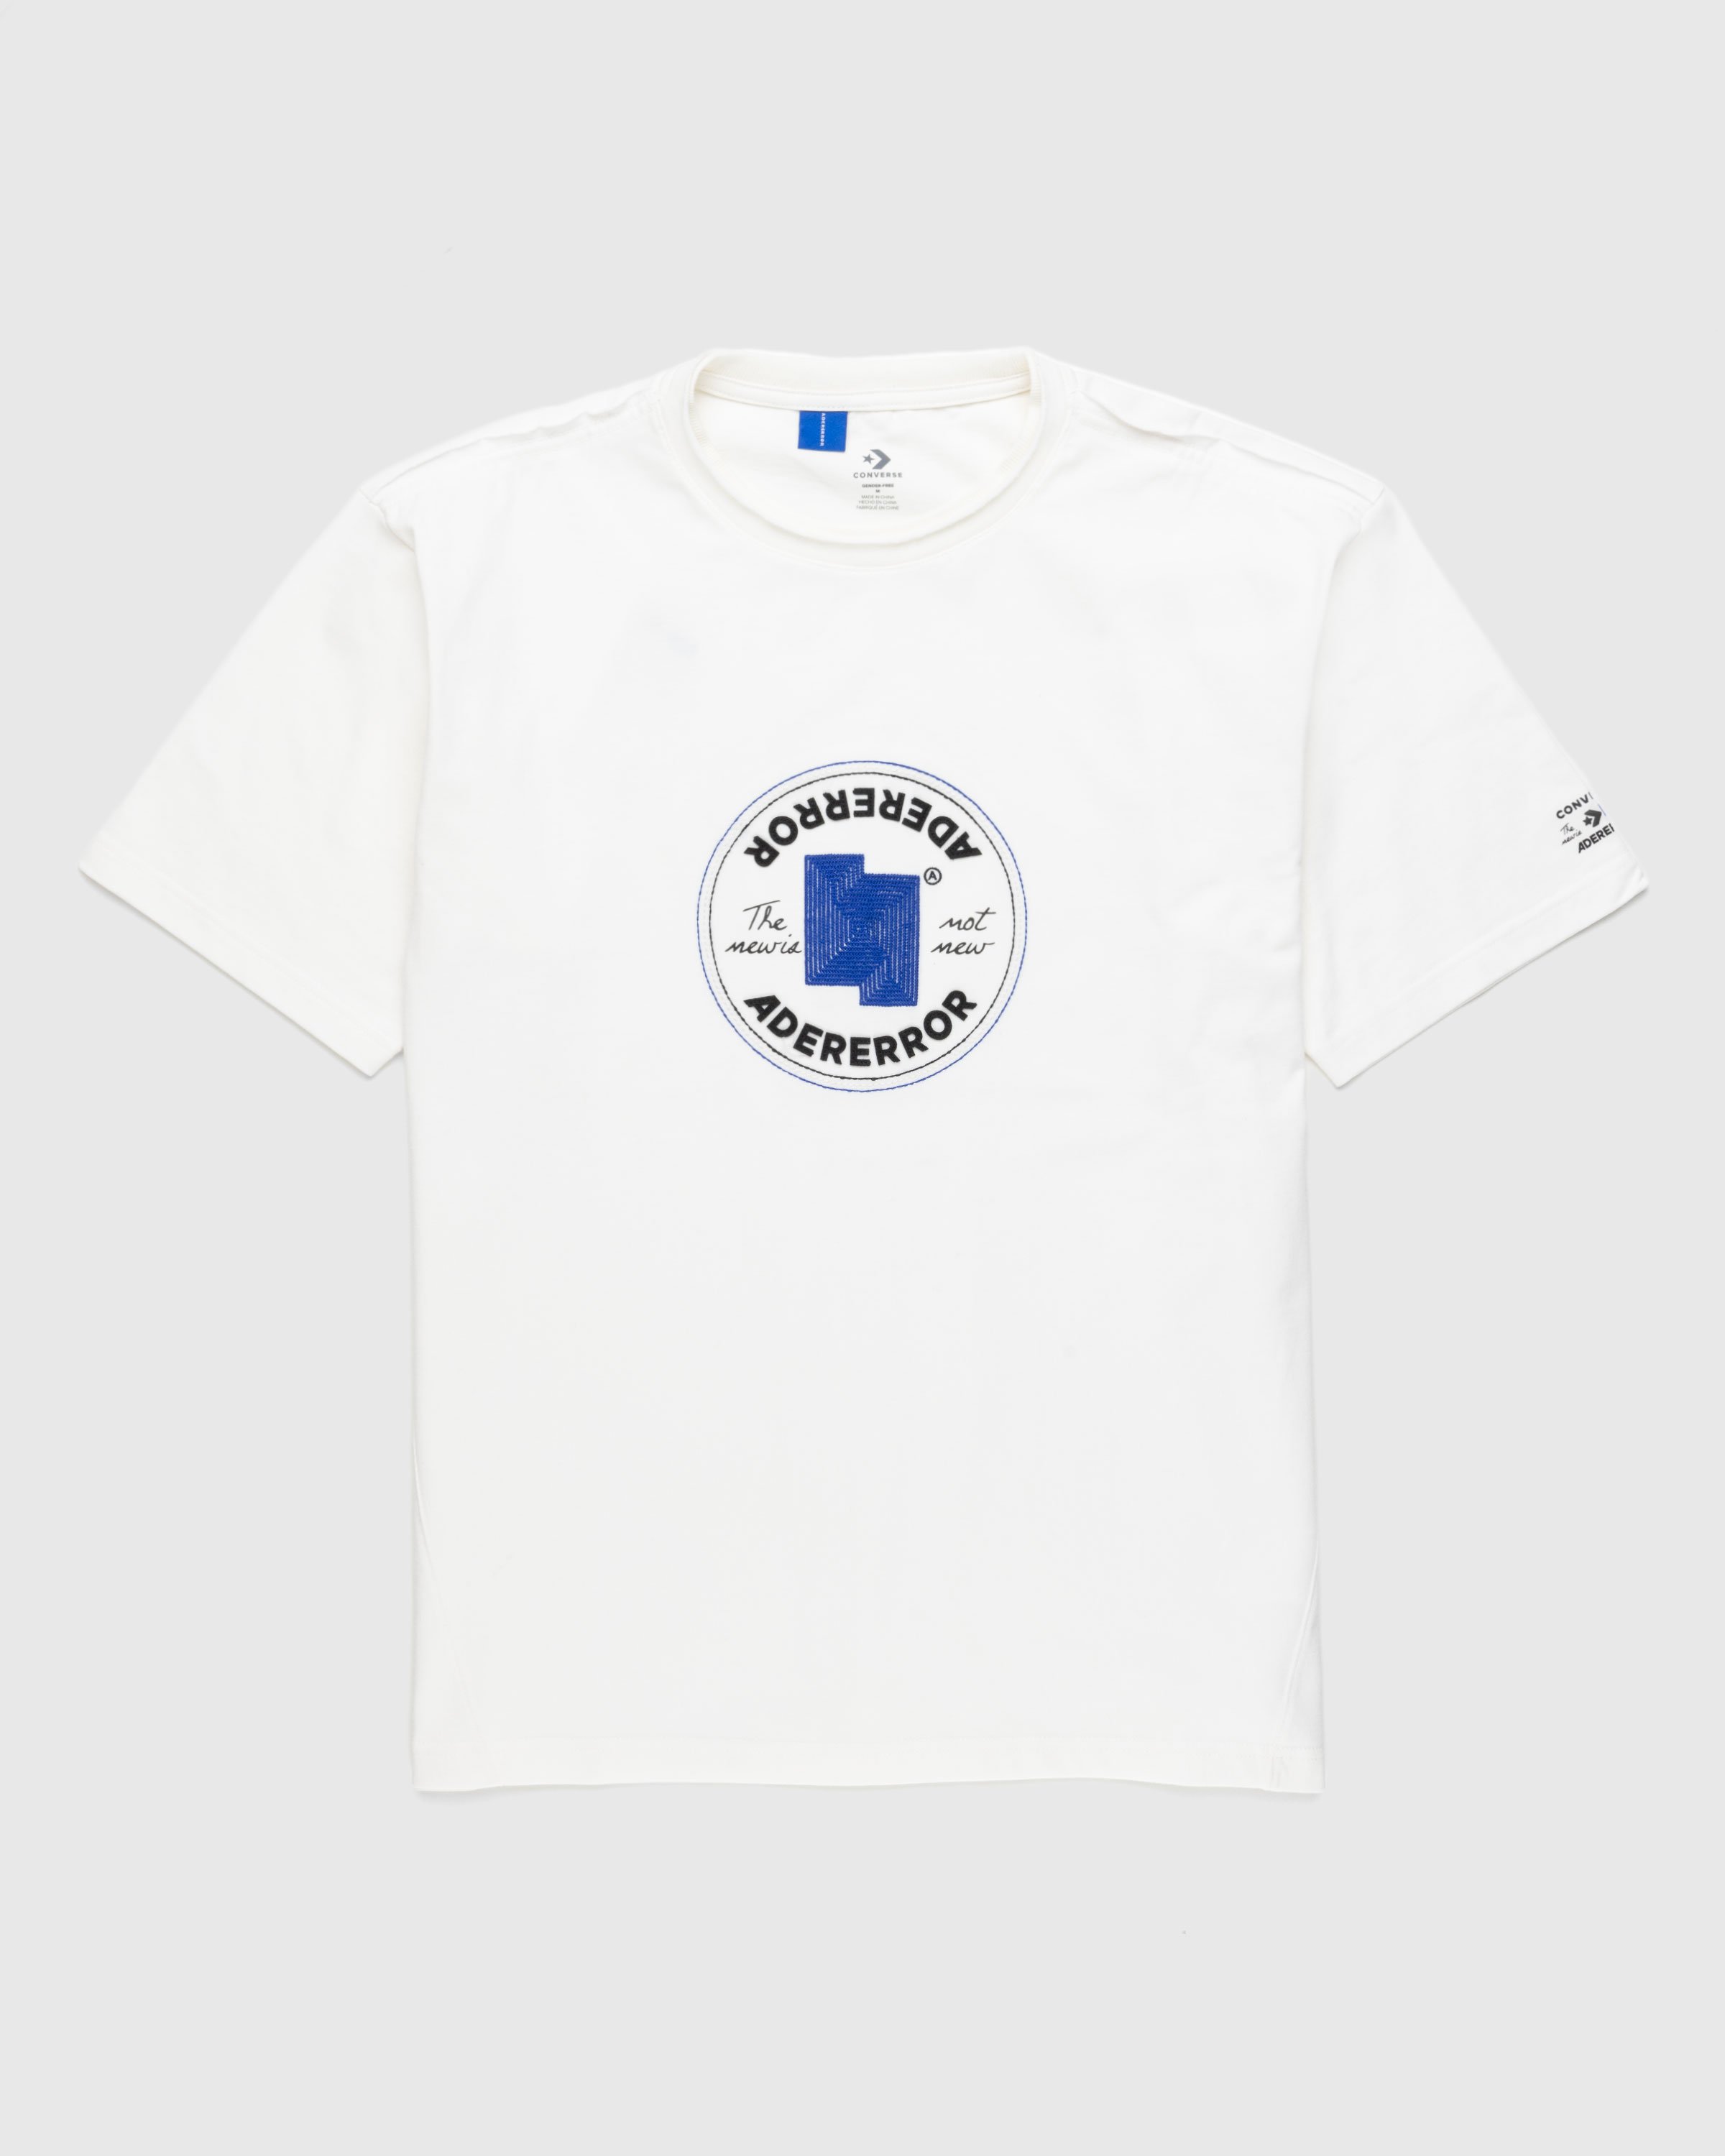 Converse x Ader Error - Shapes T-Shirt Cloud Dancer - Clothing - White - Image 1